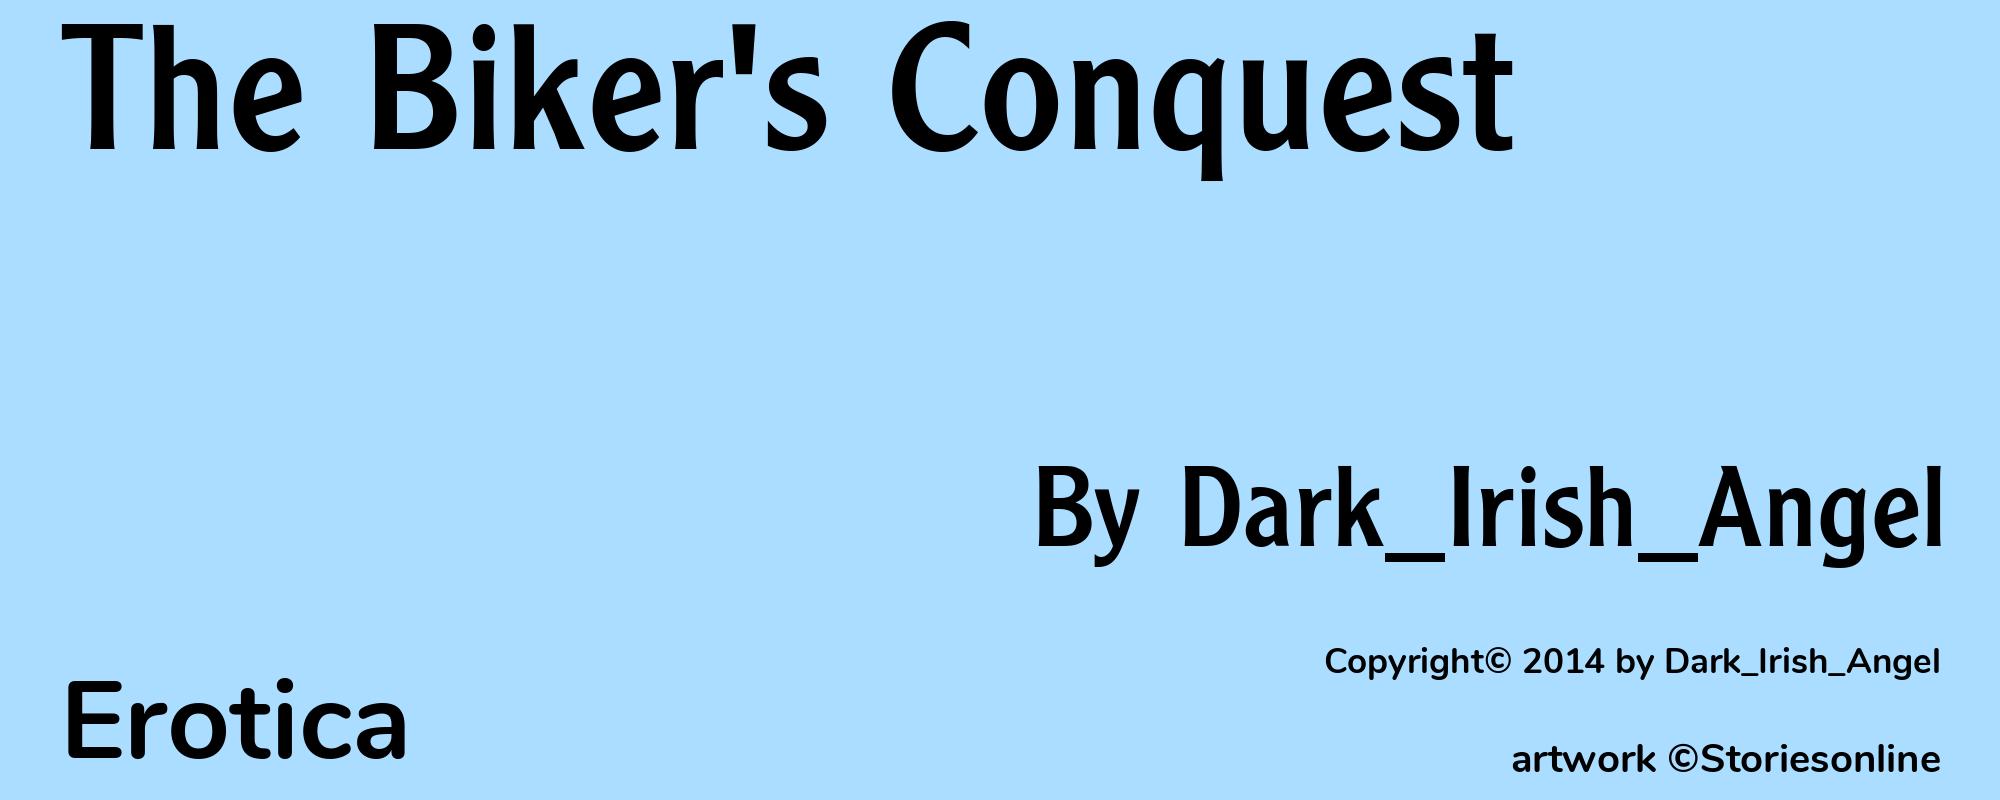 The Biker's Conquest - Cover